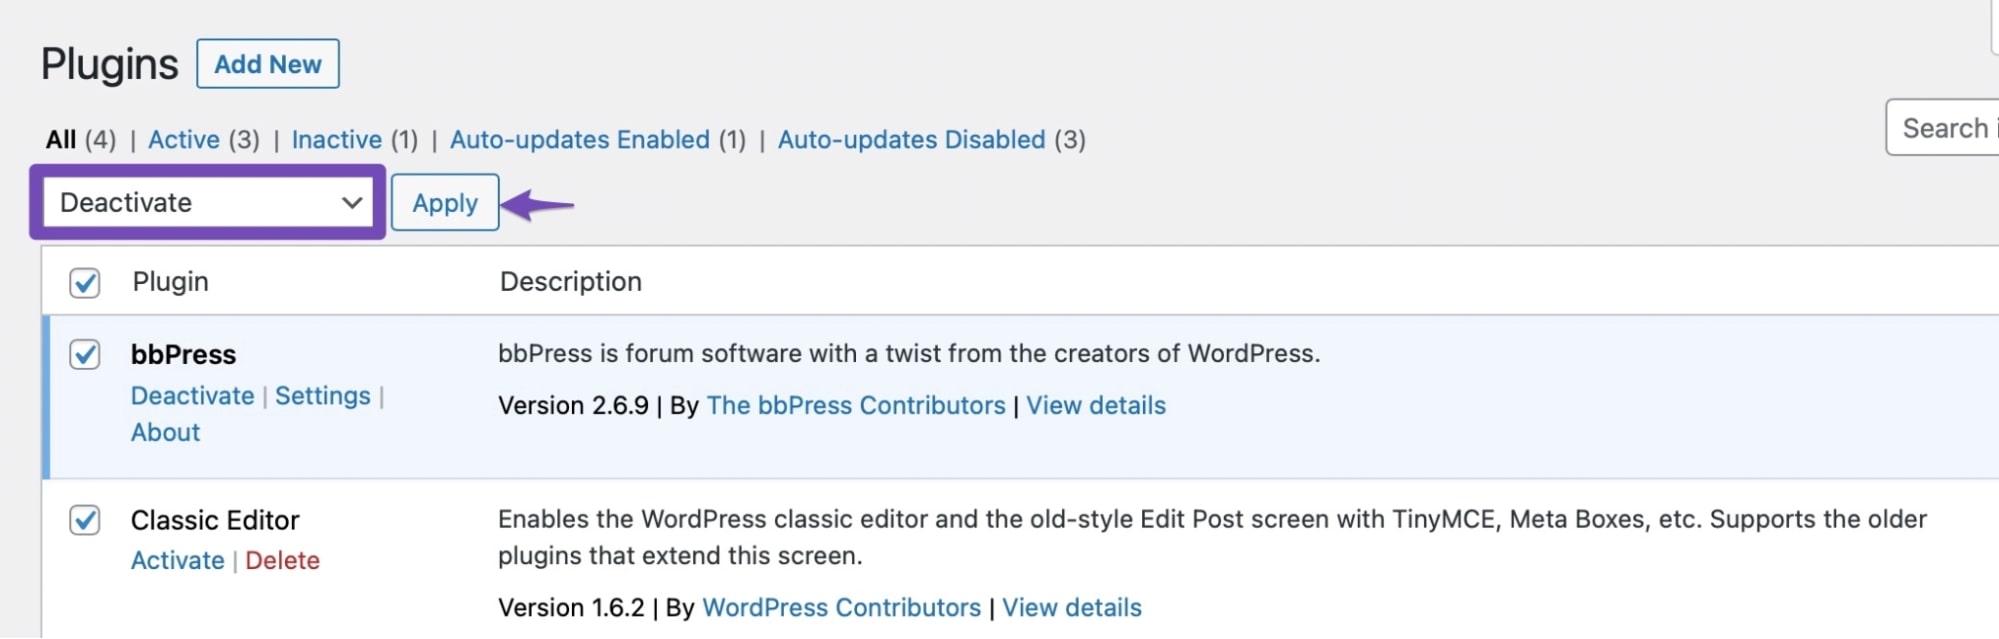 Sửa lỗi “Updating Failed. The Response is Not a Valid JSON Response” trong WordPress thế nào?